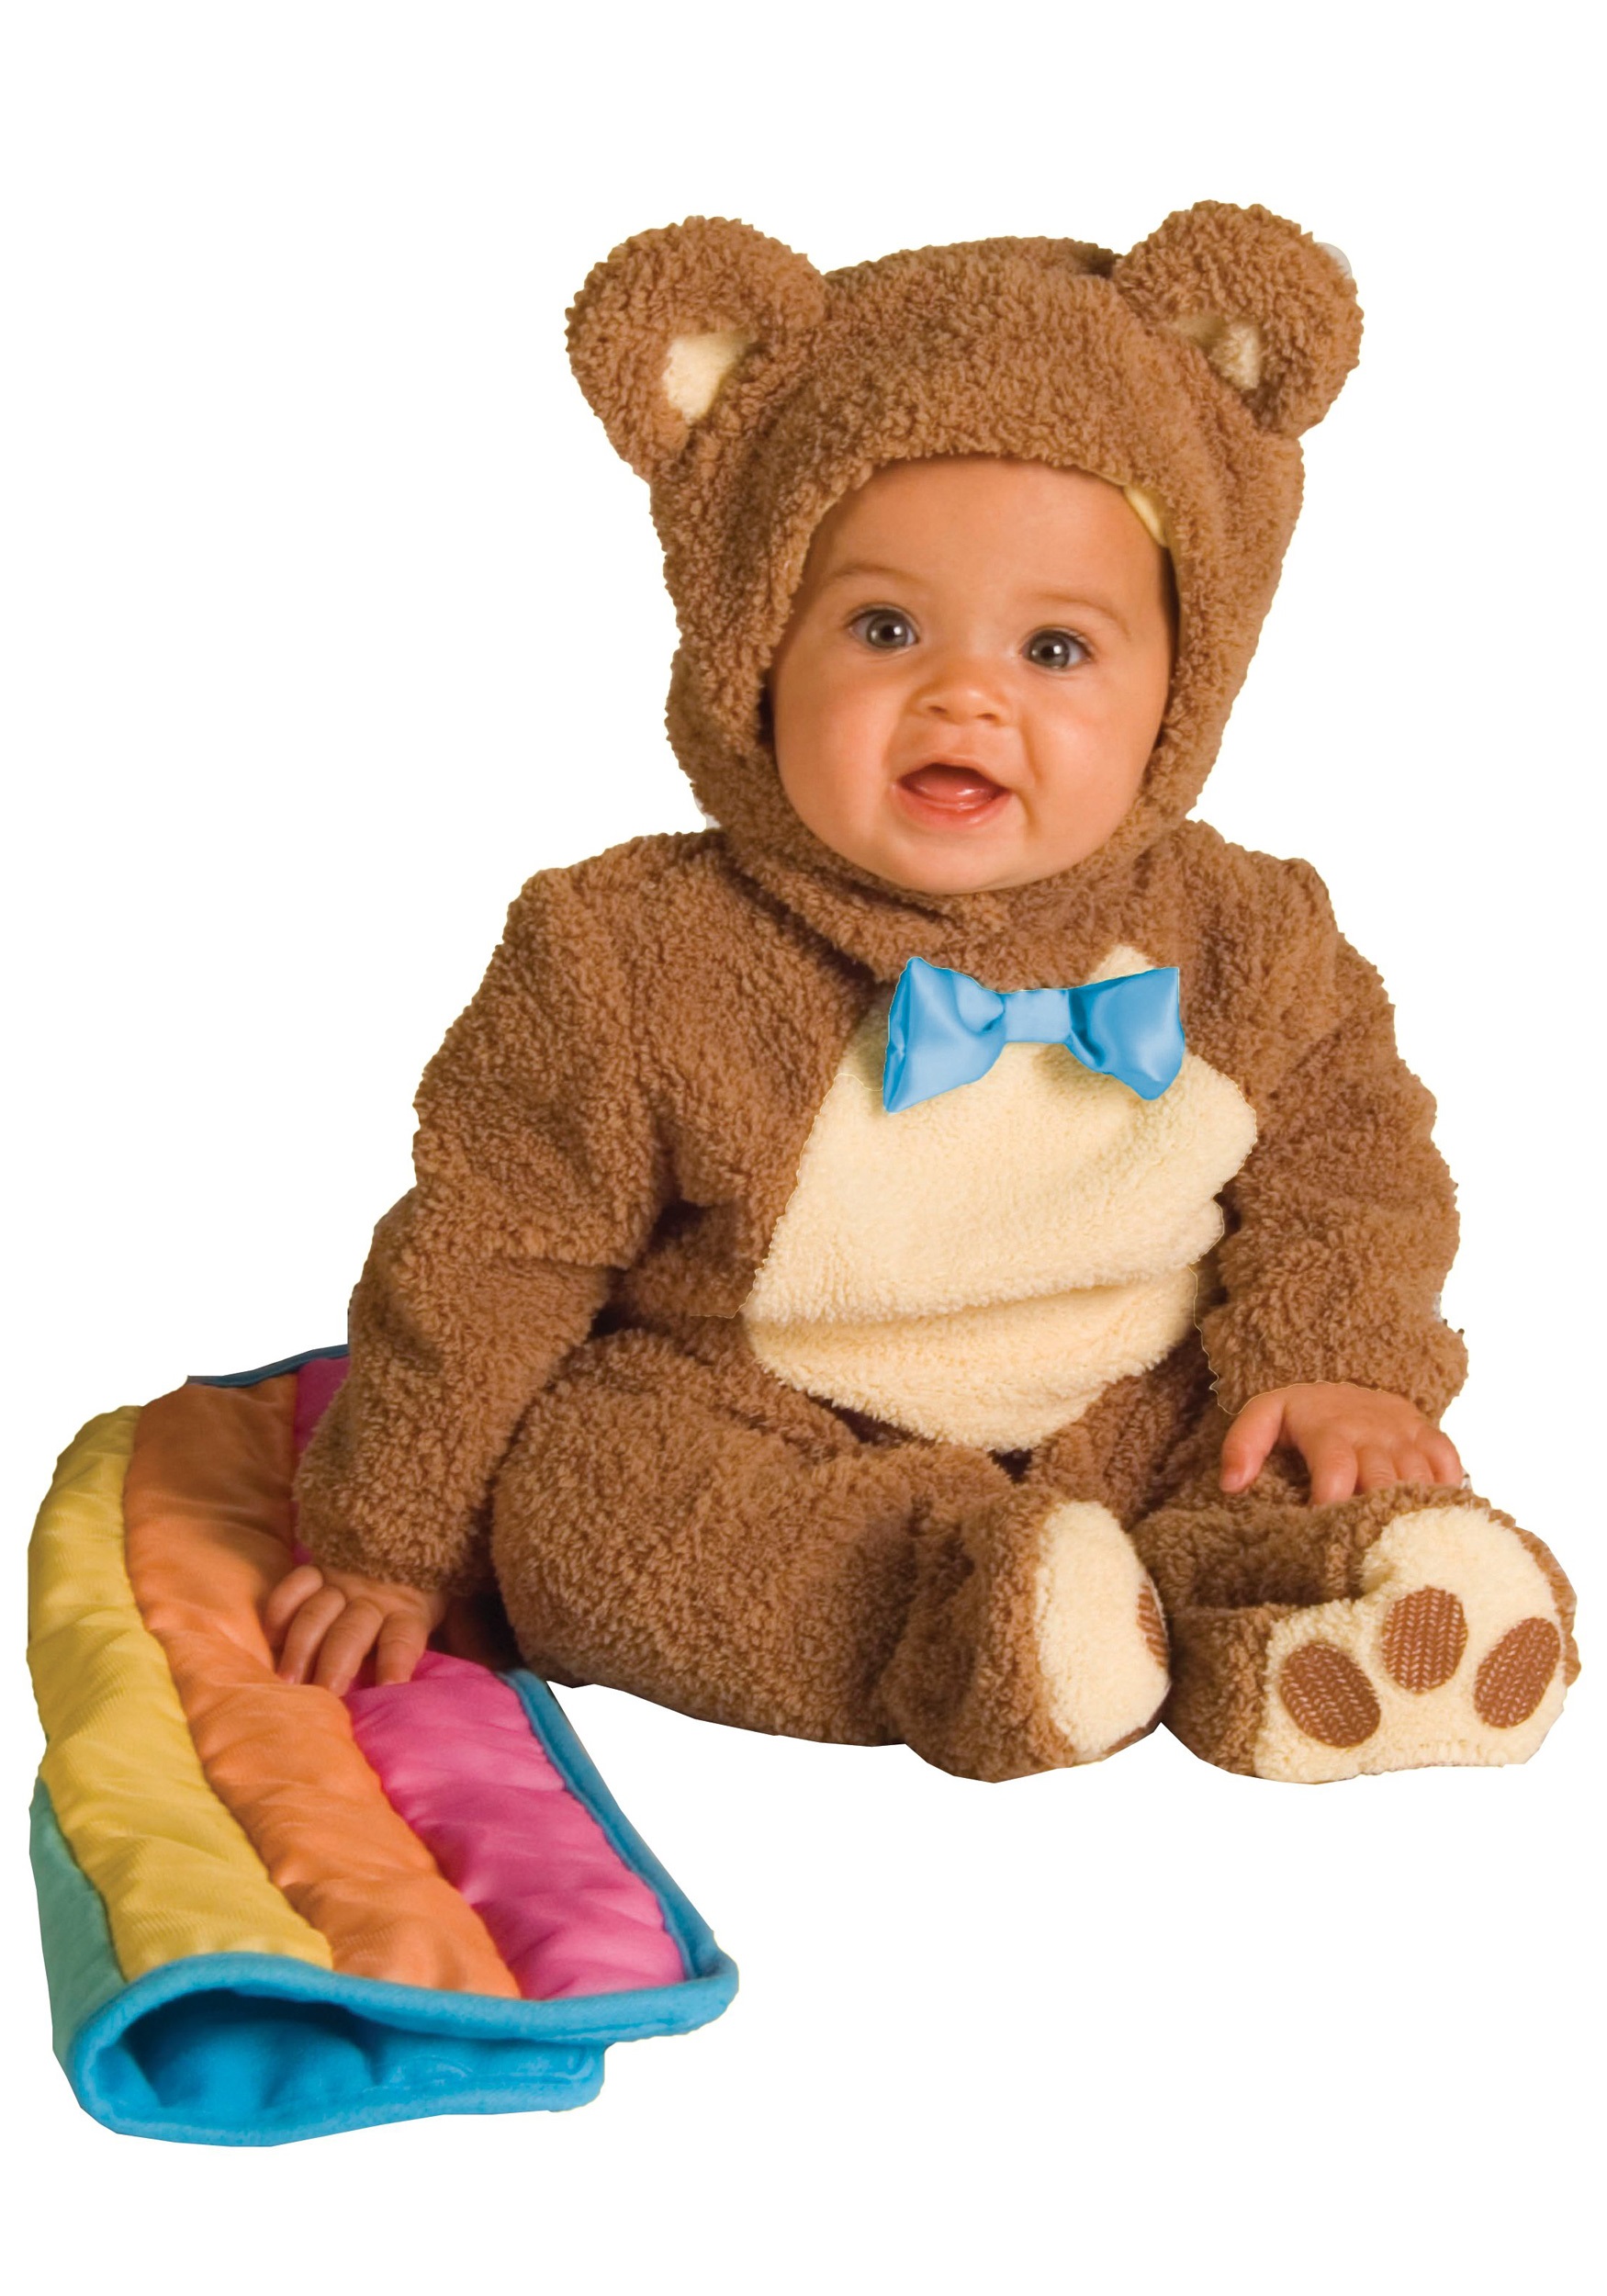 Infant Bear Costume - Baby Teddy Bear Halloween Costumes